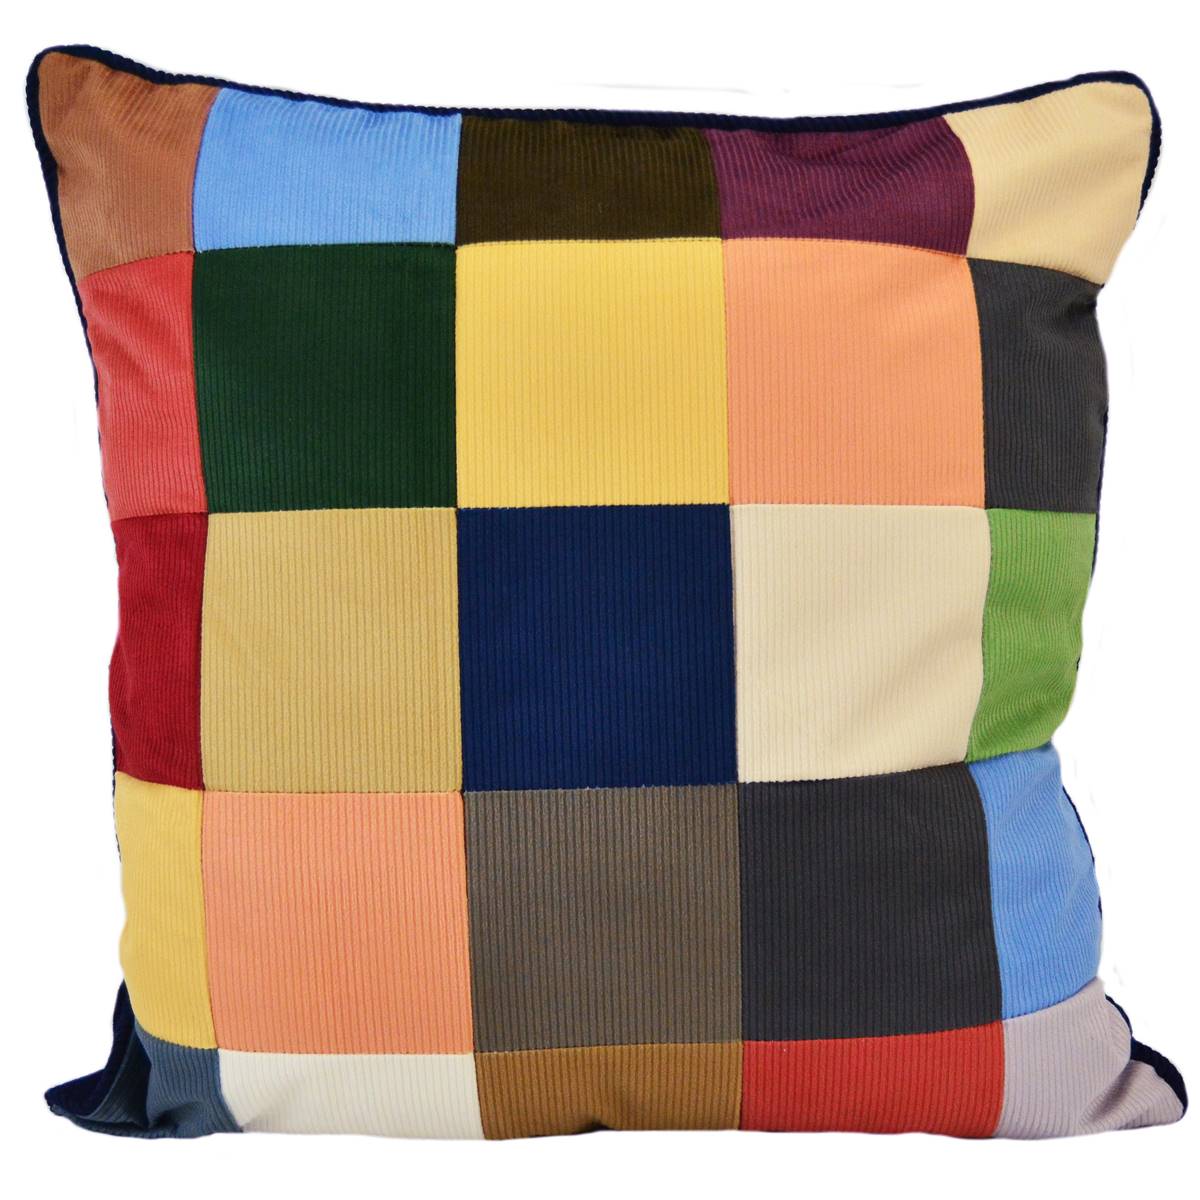 Donna Sharp Sunset Cottage Patch Decorative Pillow - 18x18